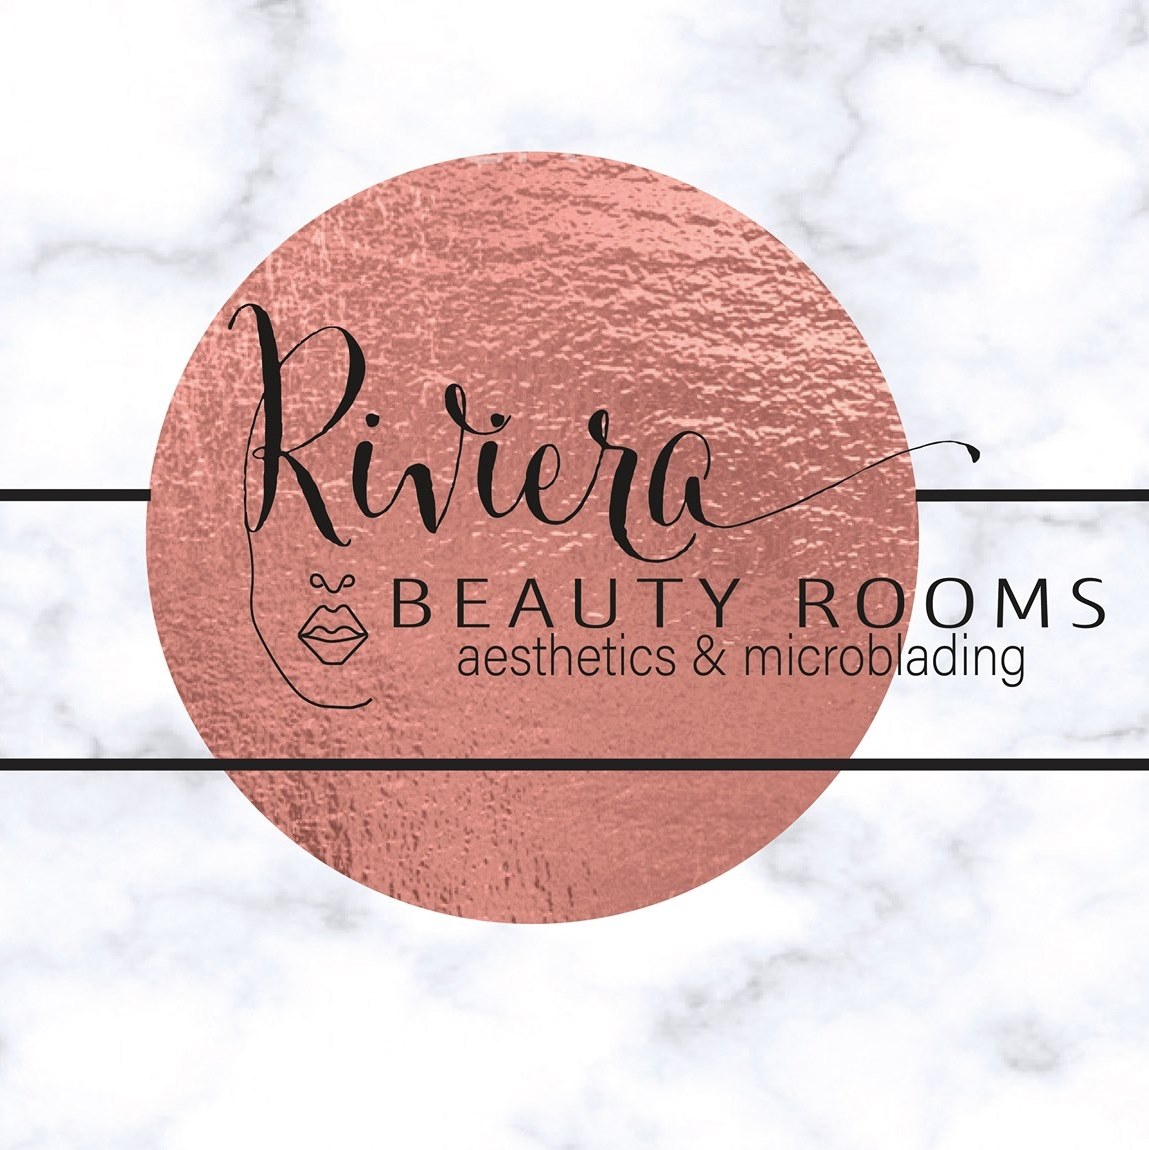 Riviera Beauty Rooms